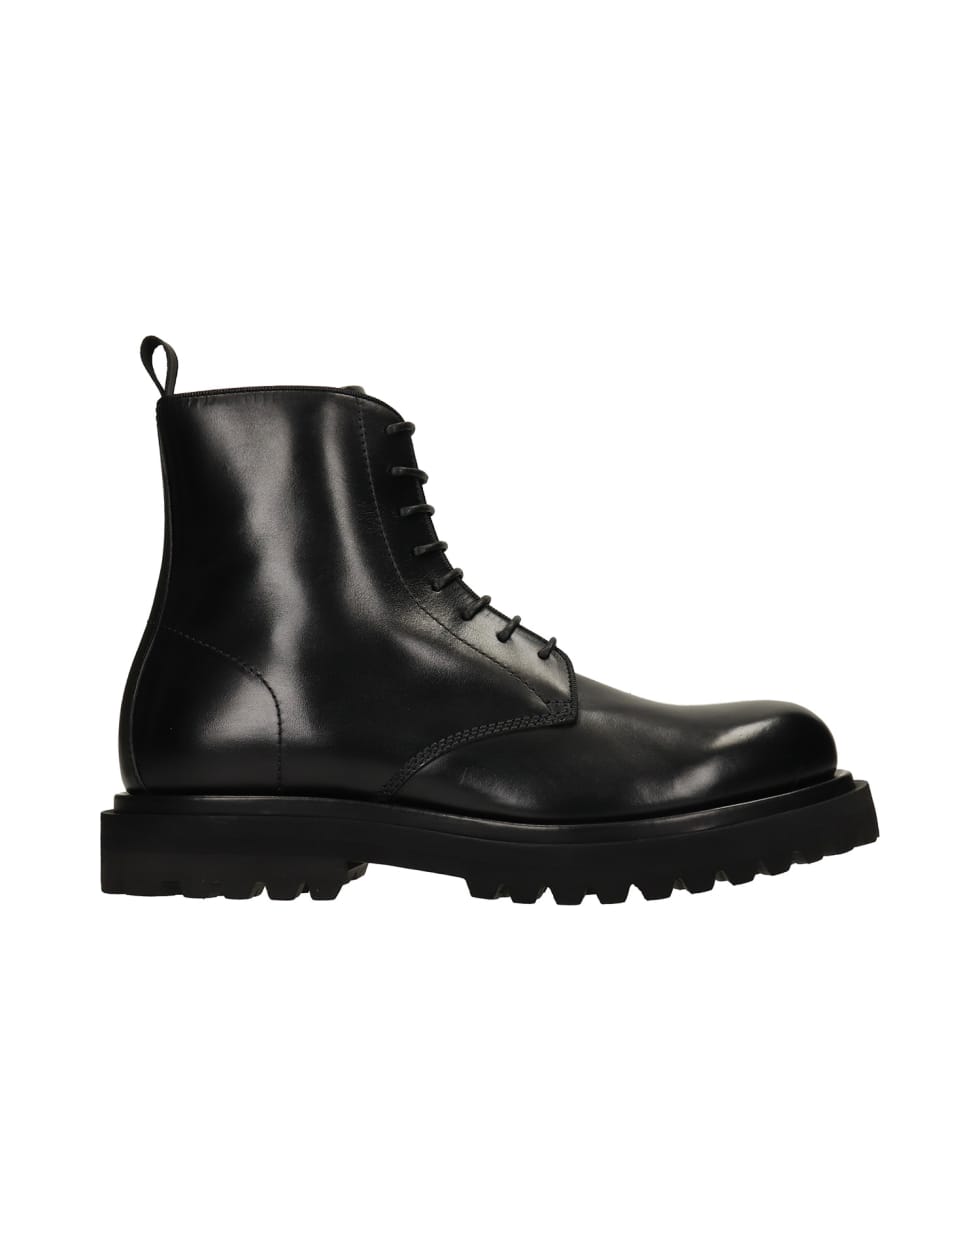 Officine Creative Eventual 002 Combat Boots In Black Leather - black